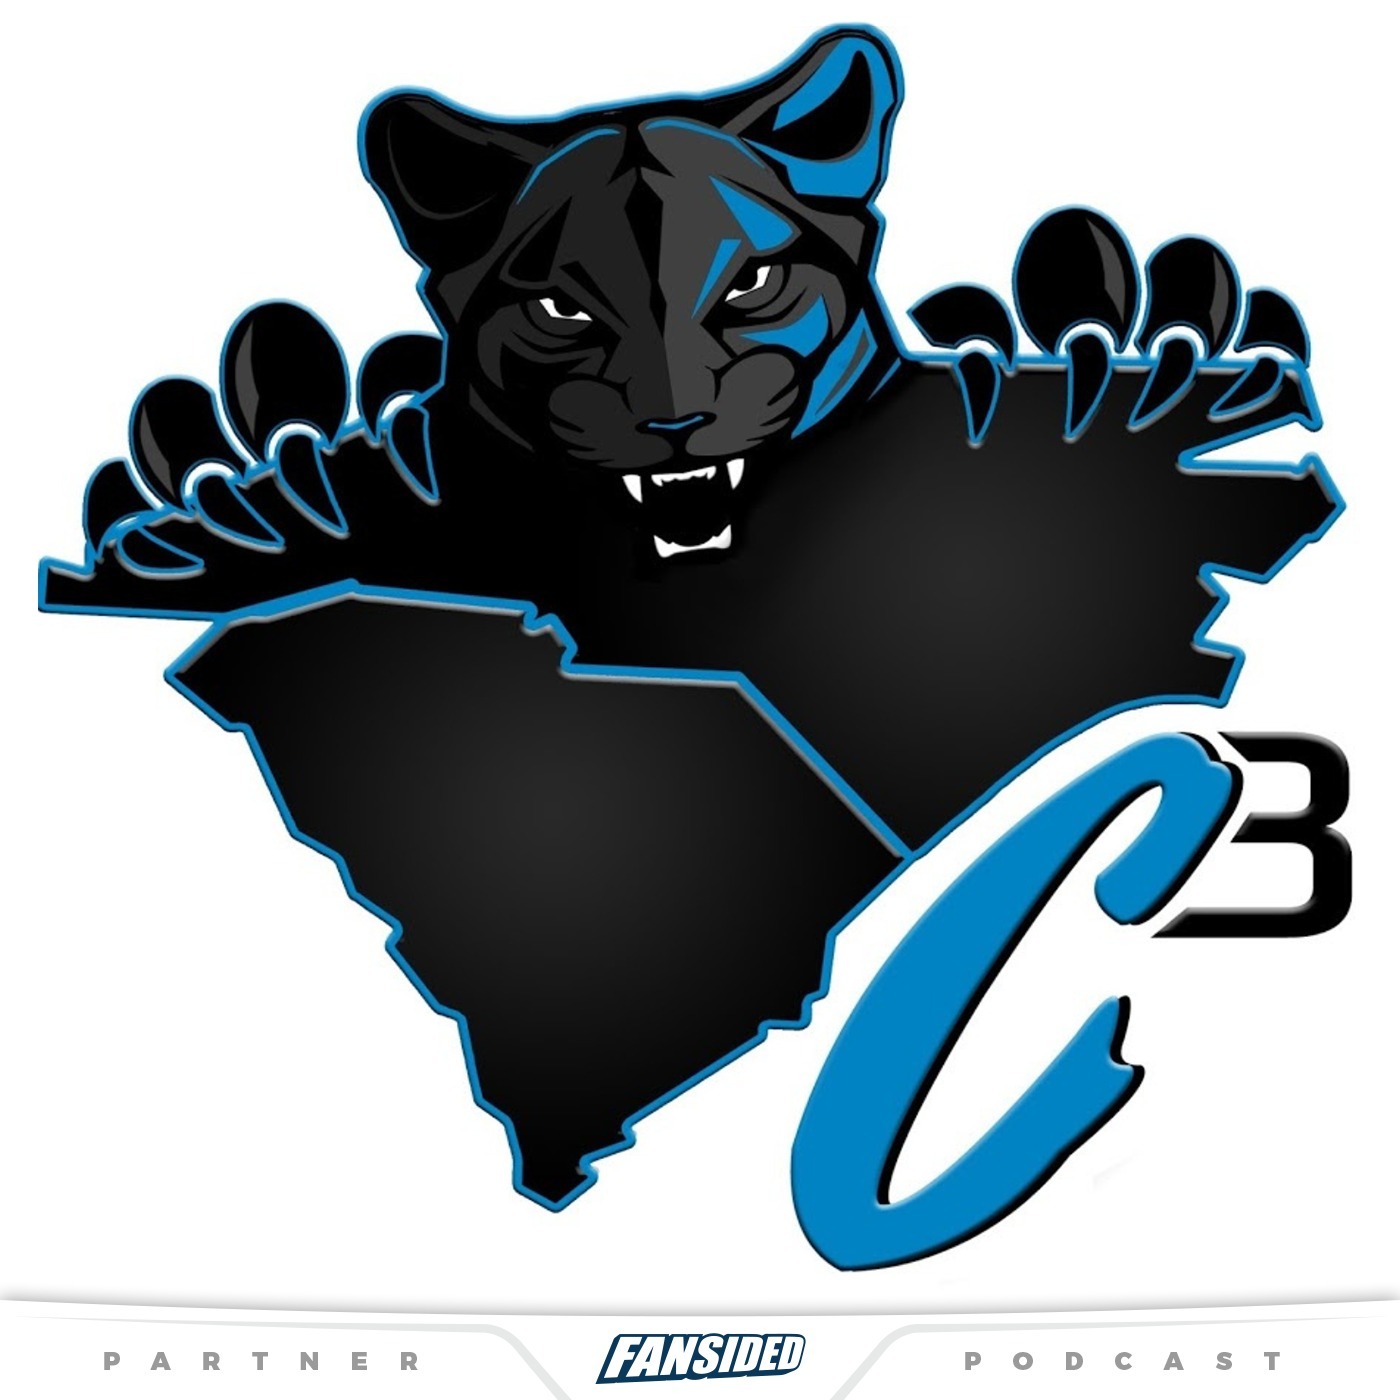 Carolina Panthers Commit To Keep Pounding The Rock